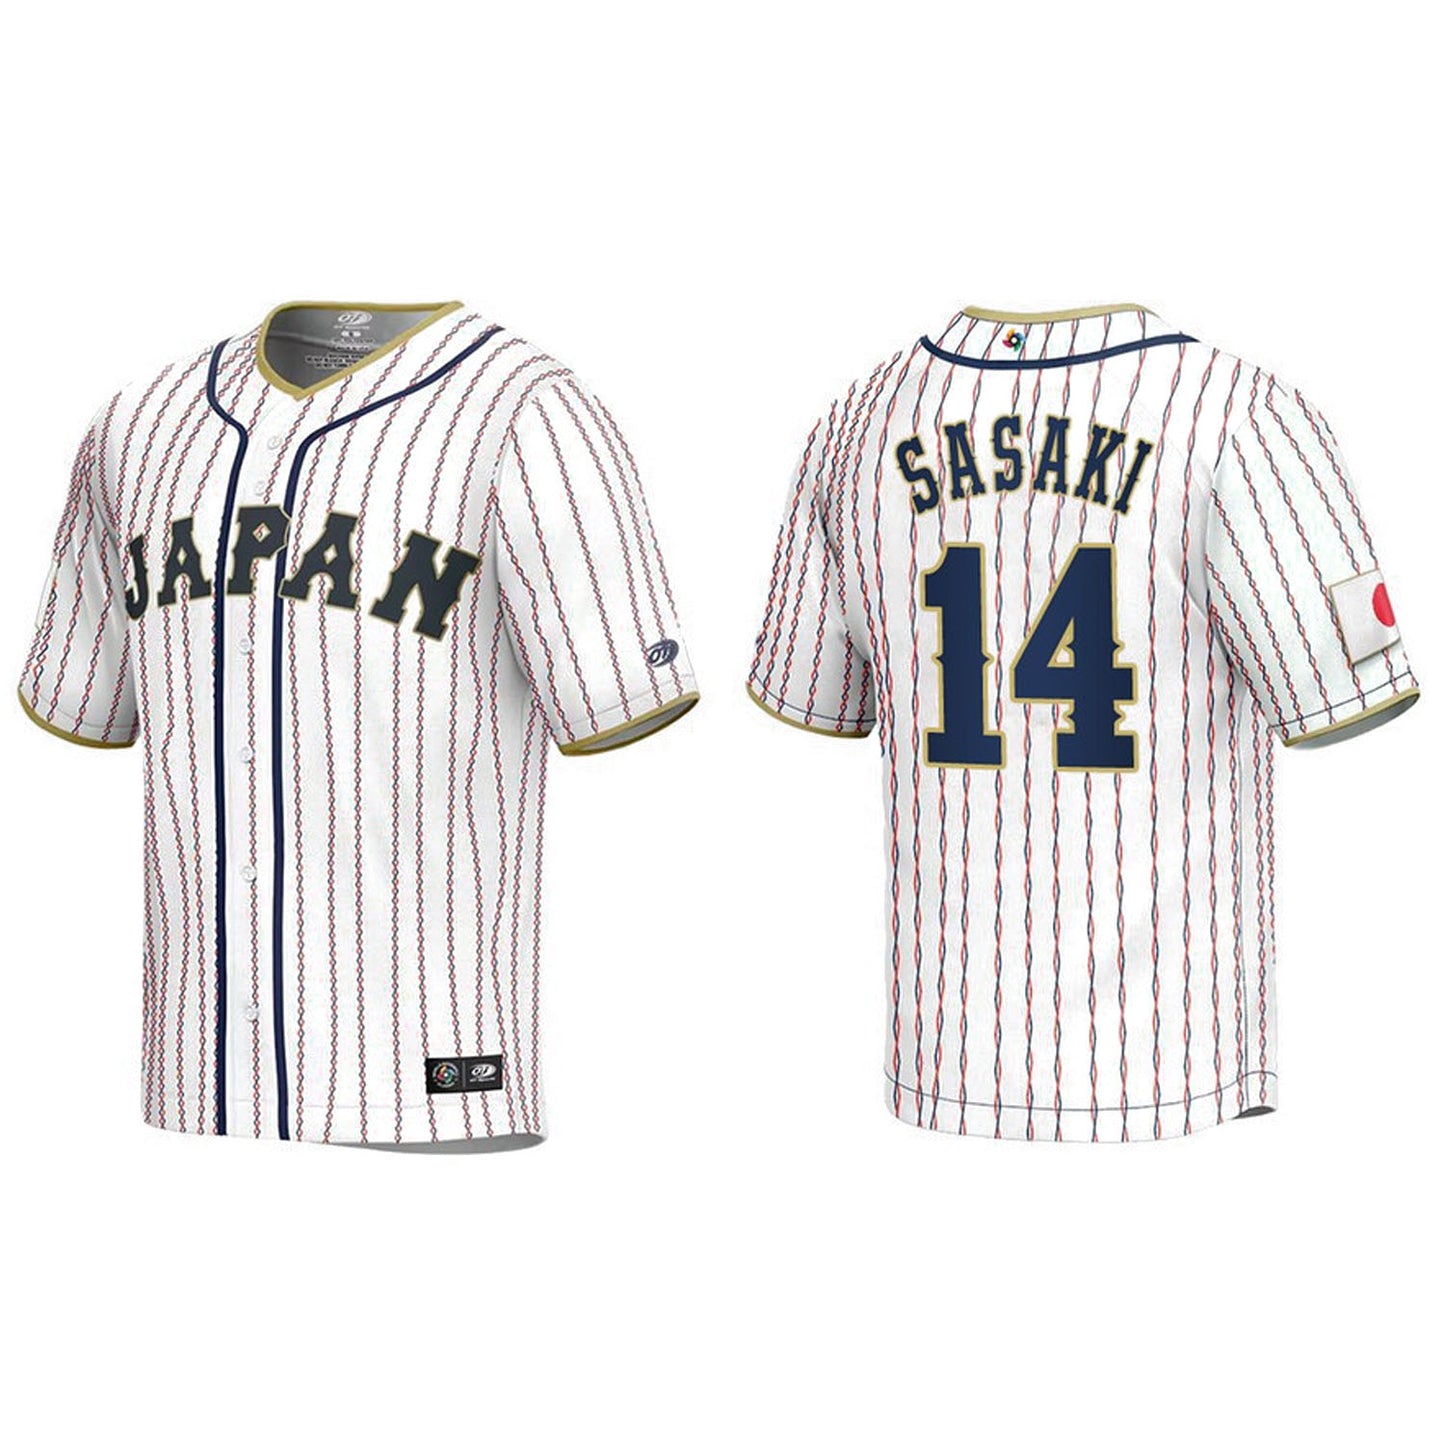 authentic japanese baseball jerseys